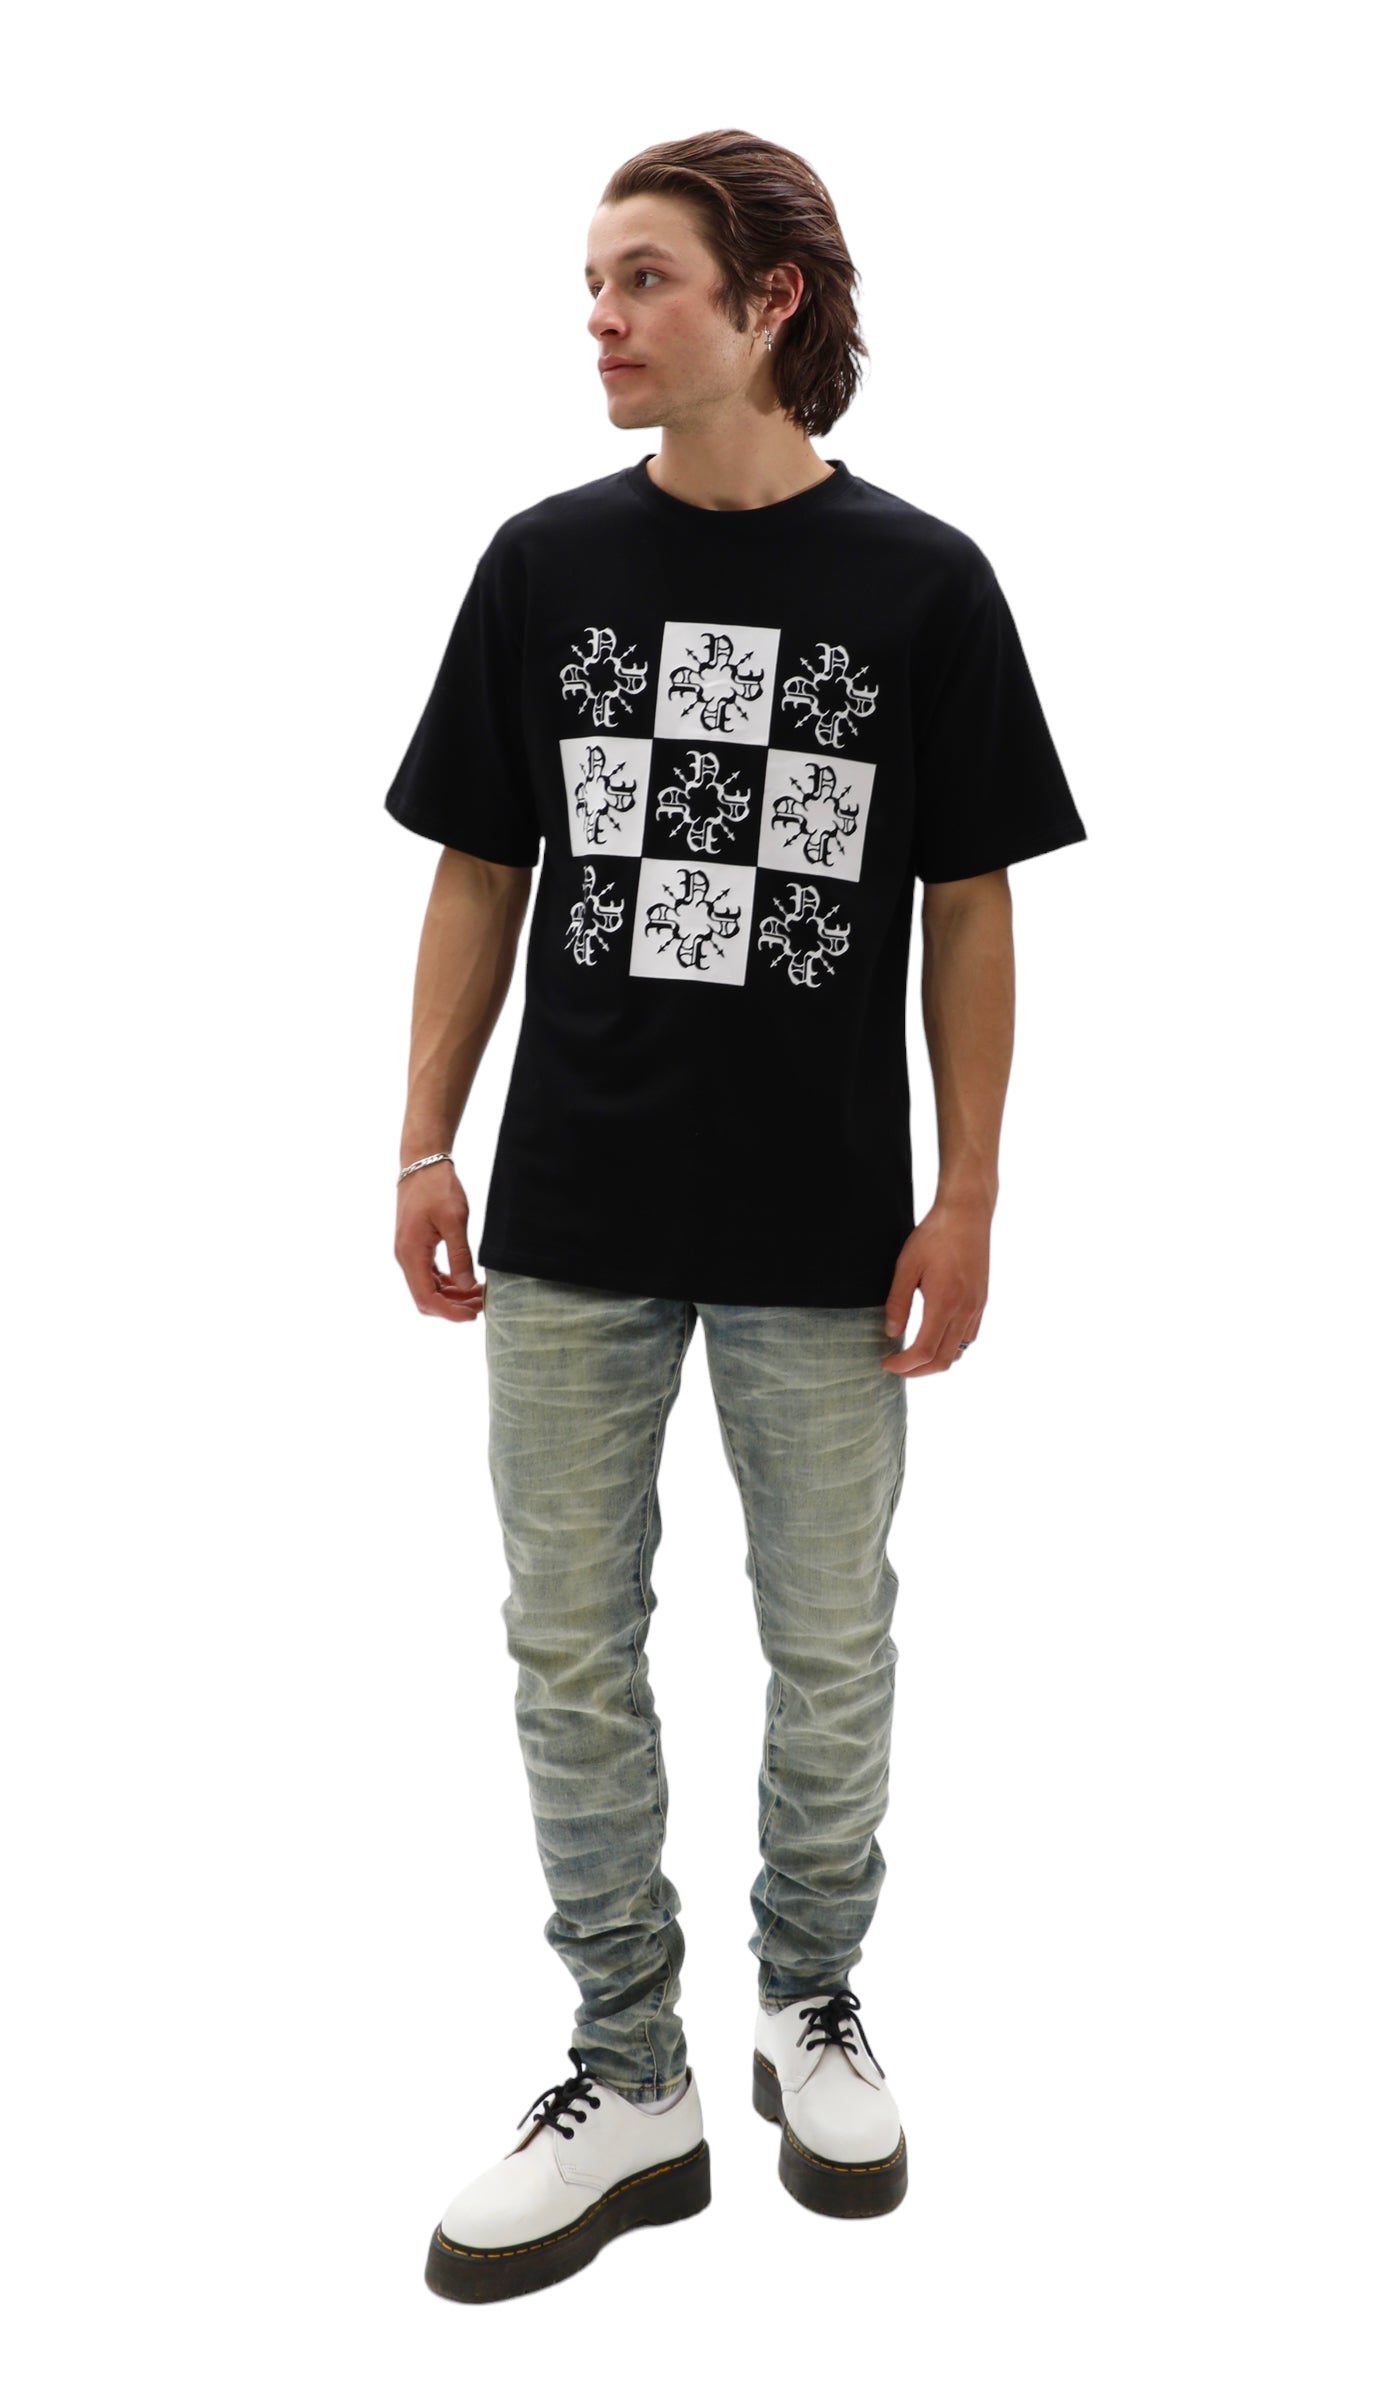 Monogram Black/White Checkers Tee - Black